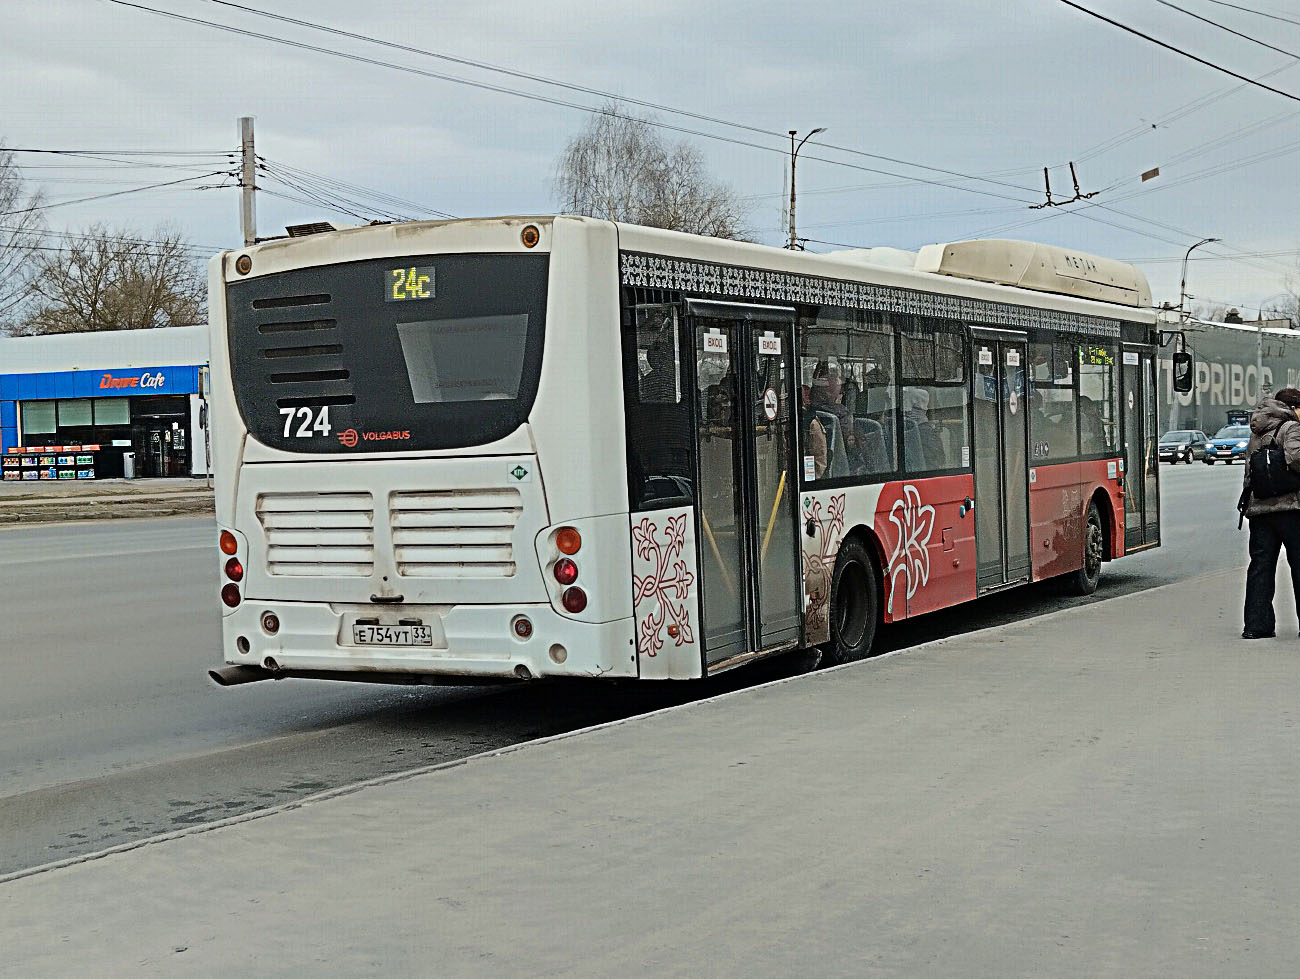 Vladimir region, Volgabus-5270.G4 (CNG) # 724